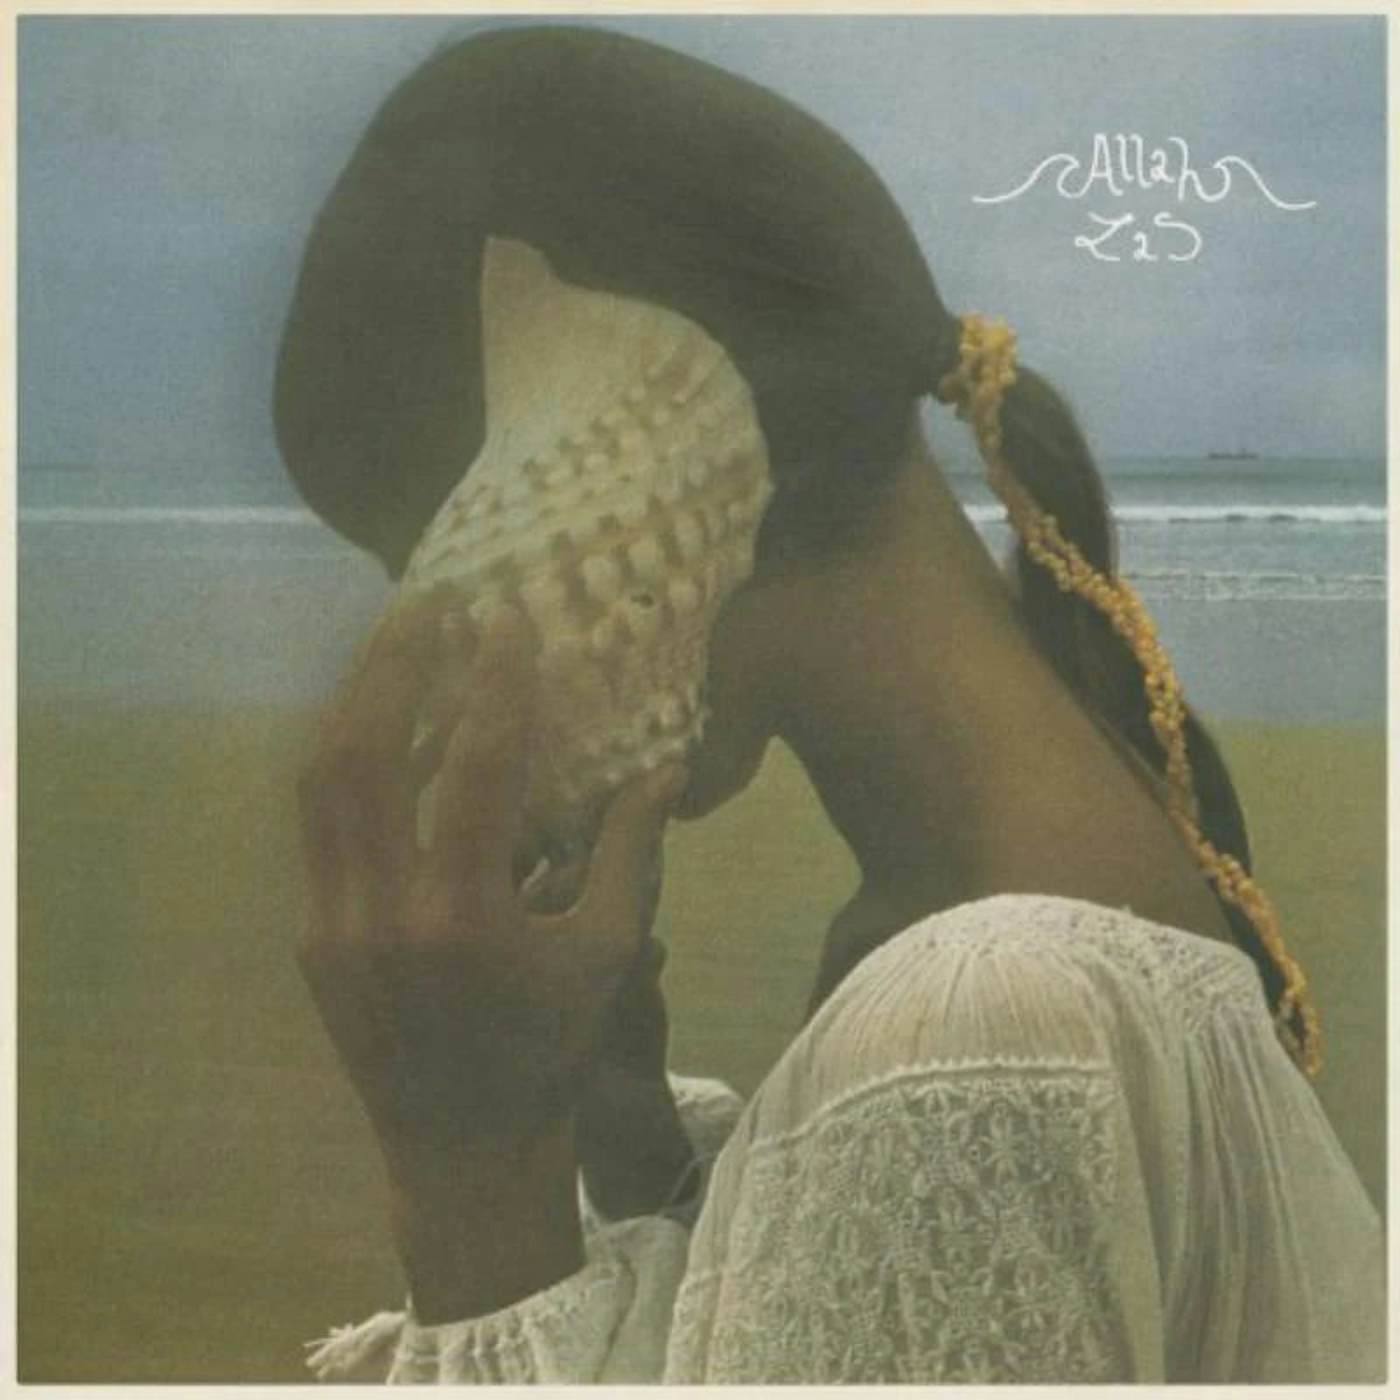 Allah-Las LP - Allah-Las (Vinyl)